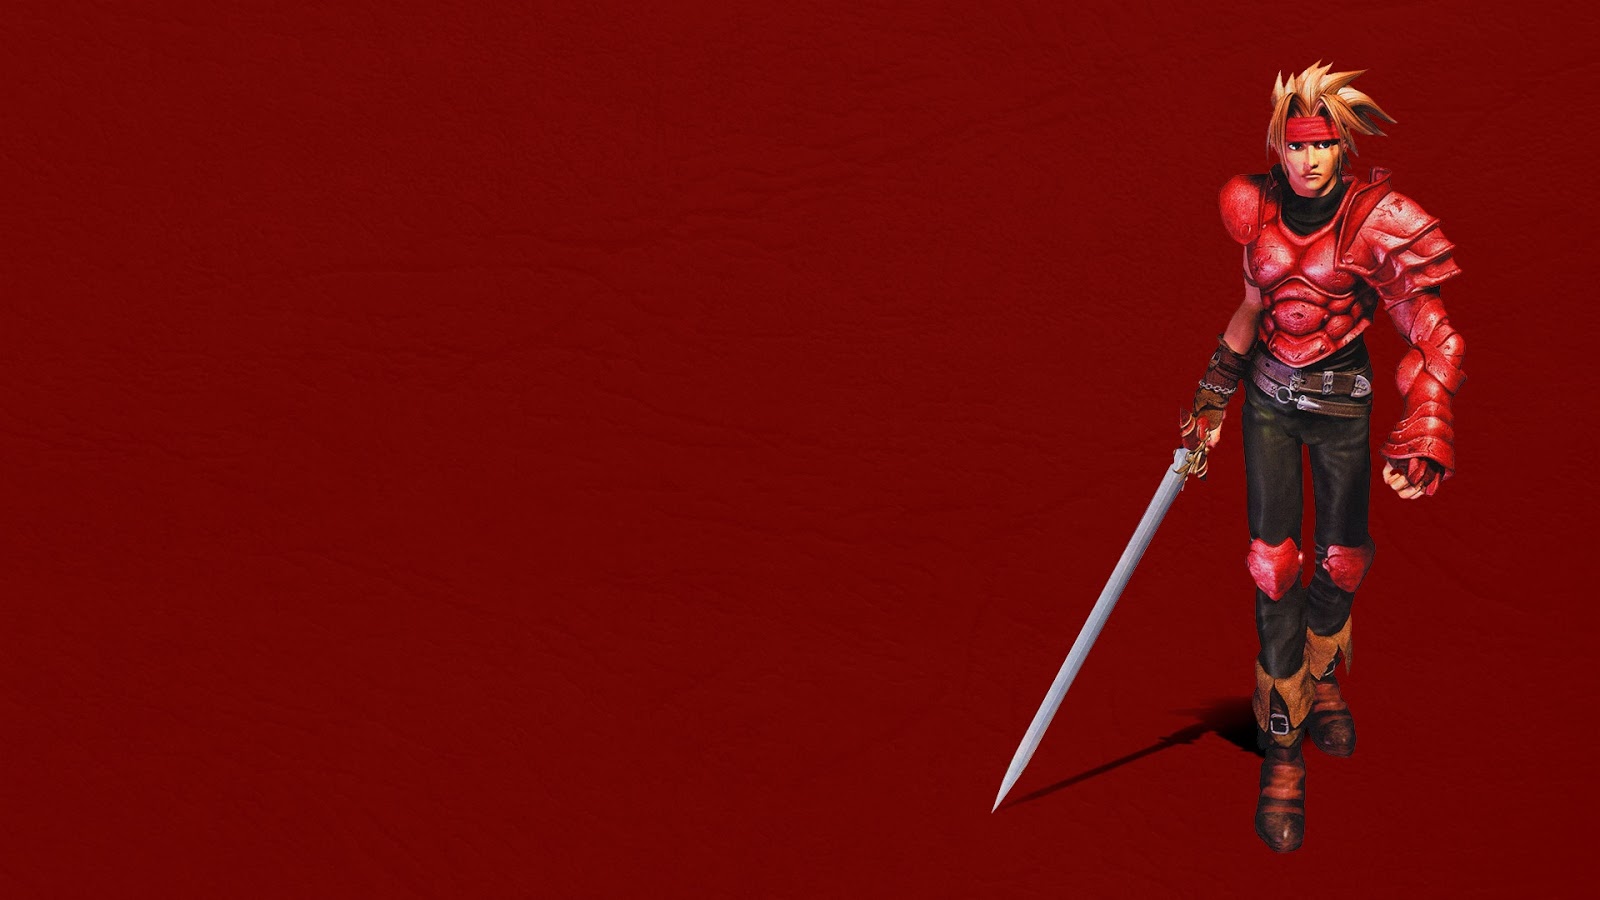 dragoon wallpaper,red,fictional character,superhero,animation,action figure